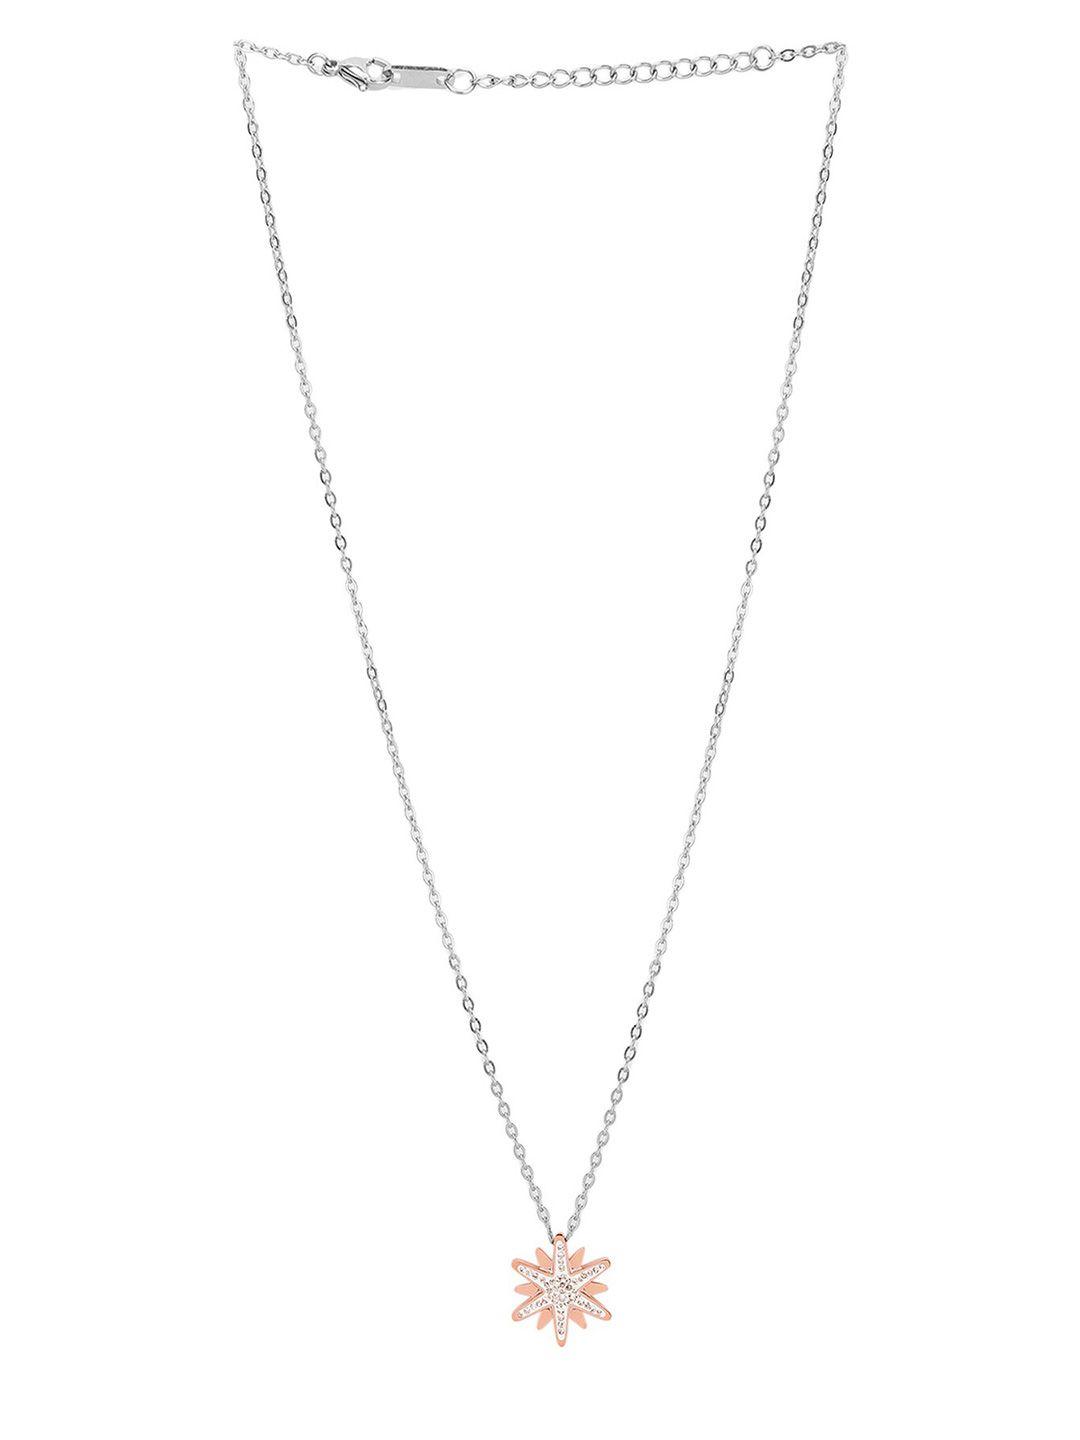 daniel klein pendant with chain